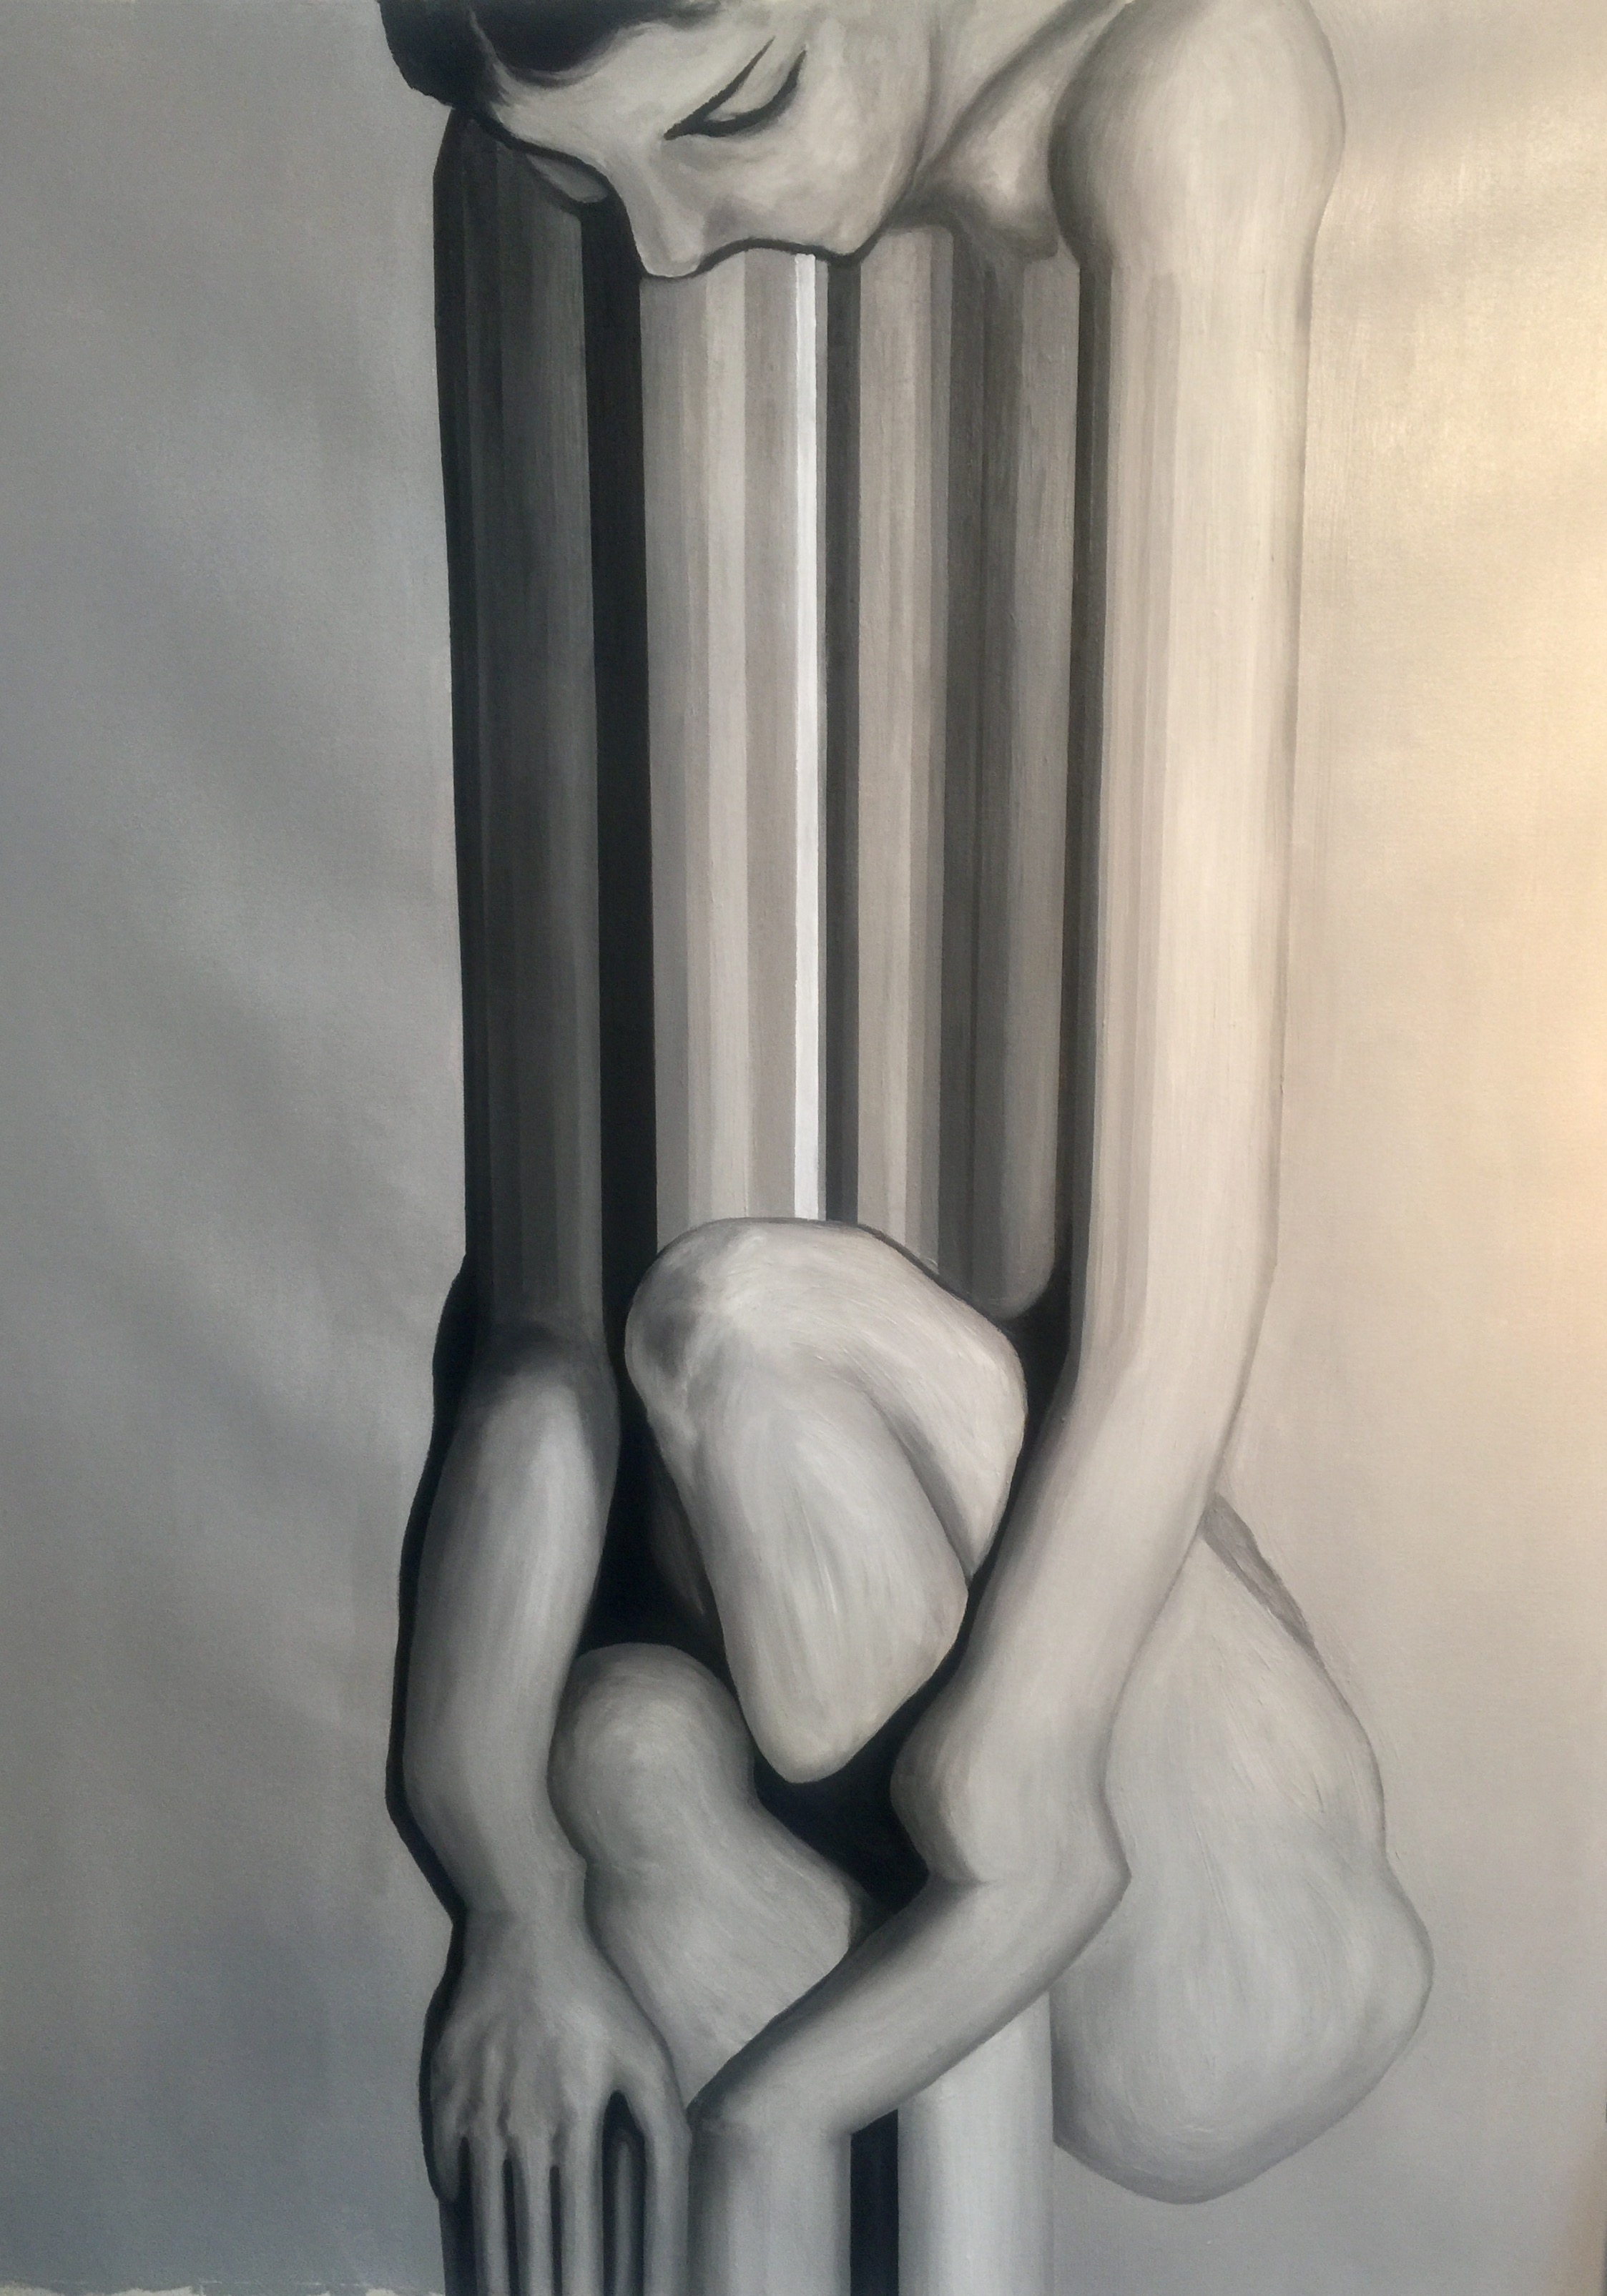  Long body, acrylic on canvas_60x60'' 2016  